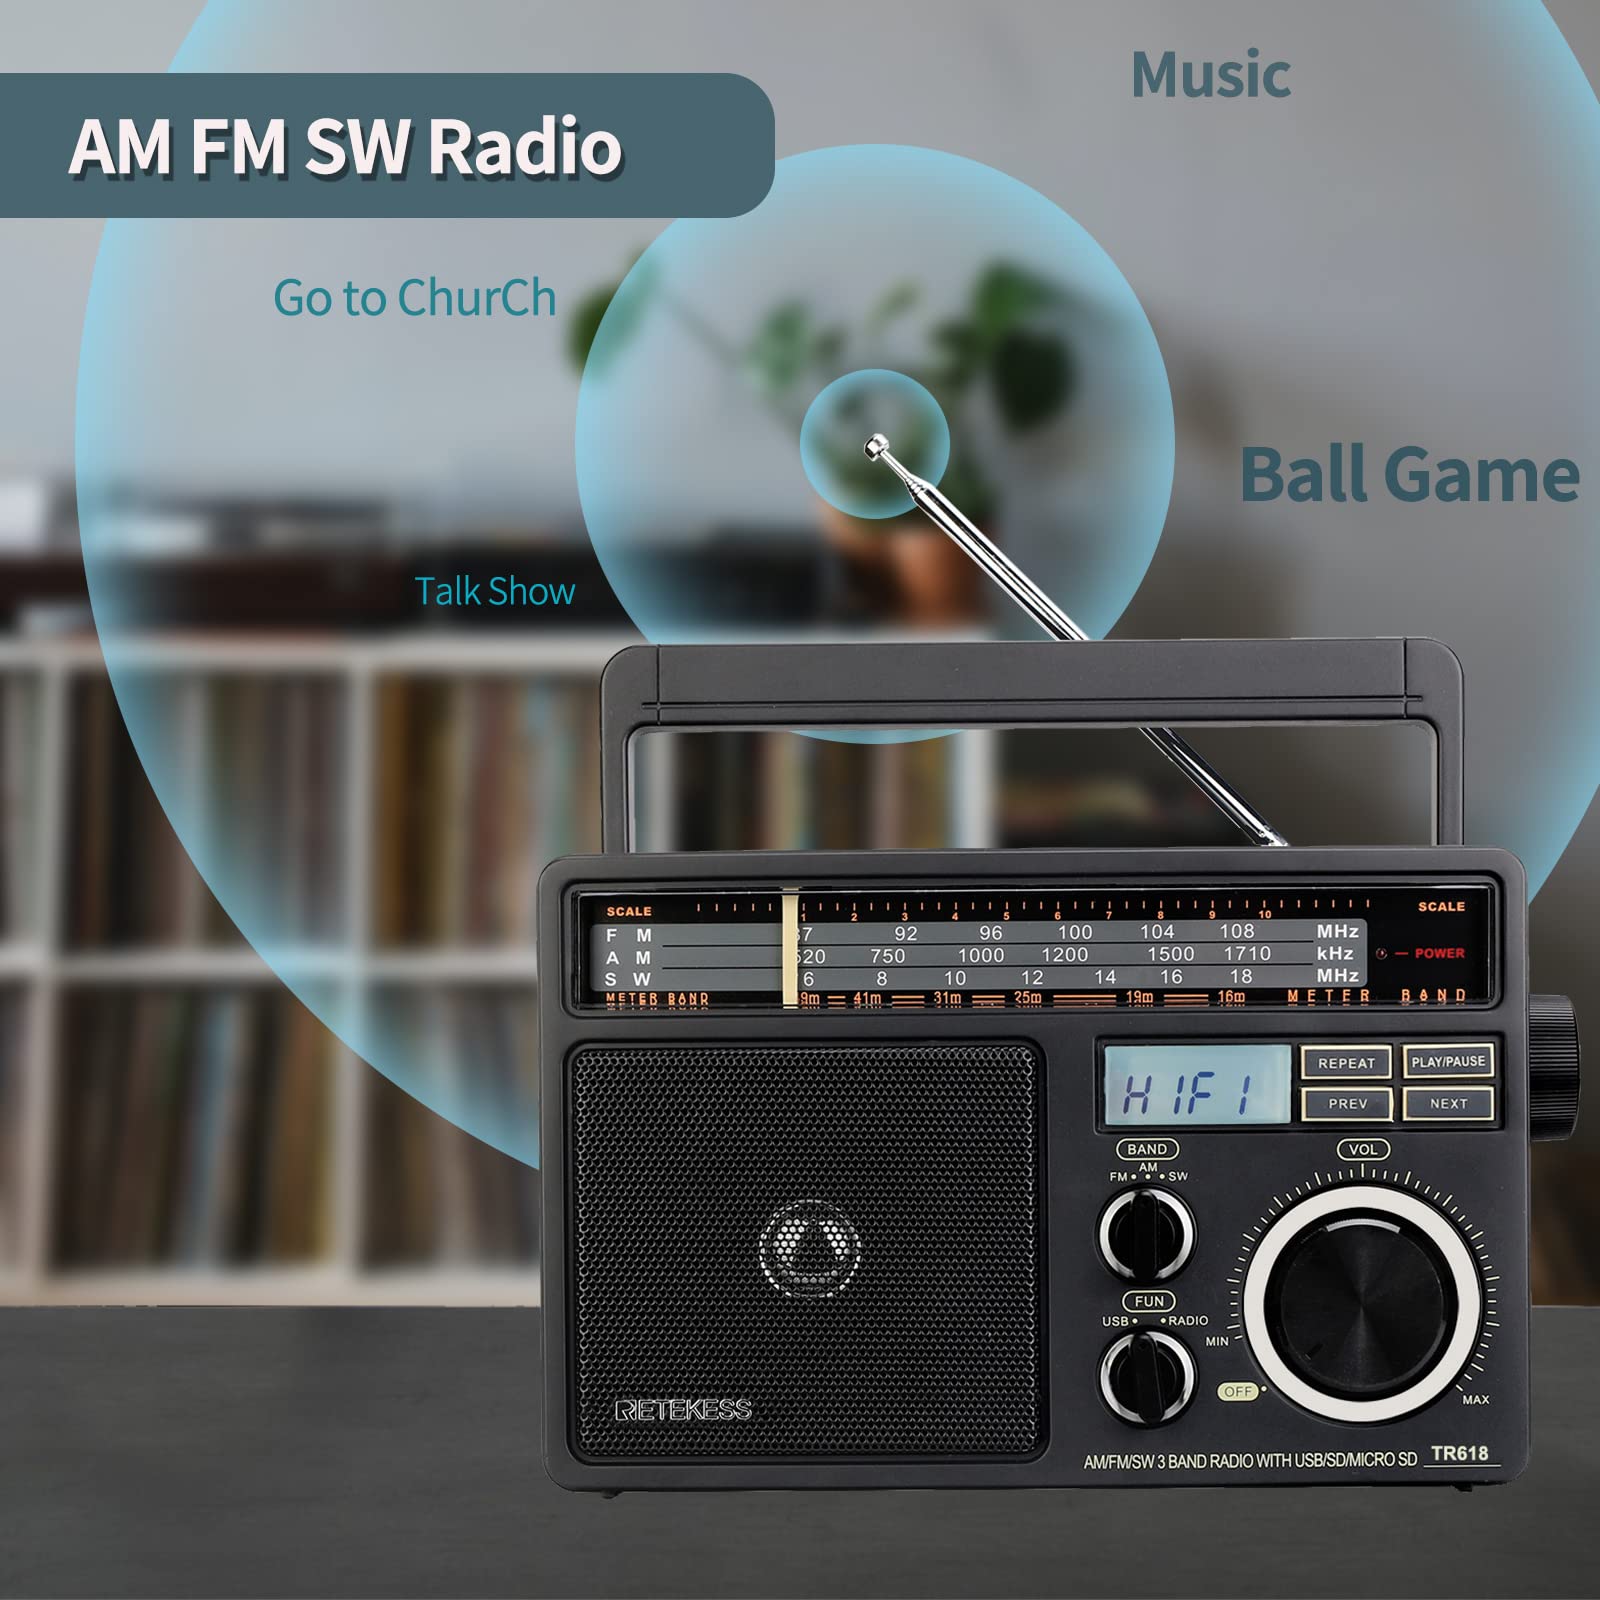 Retekess TR618 AM FM Radio Plug in Wall, Portable Shortwave Radios, Support SD, Micro SD and USB Flash Drive, AM FM Radios with 